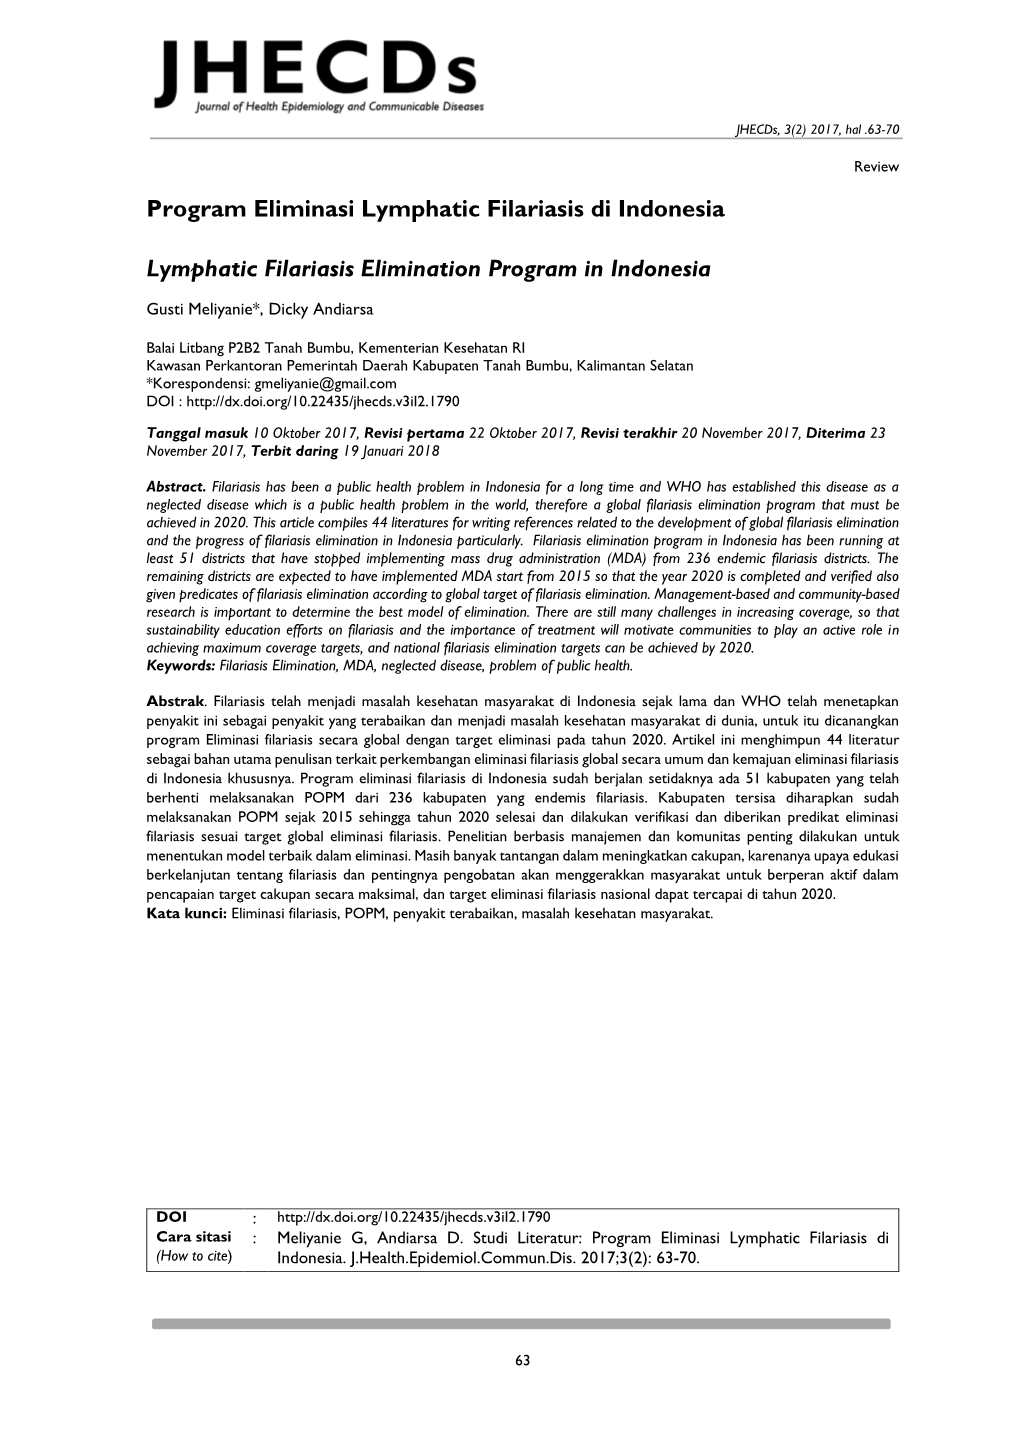 Meliyanie G, Andiarsa D. Program Eliminasi Lymphatic Filariasis Di